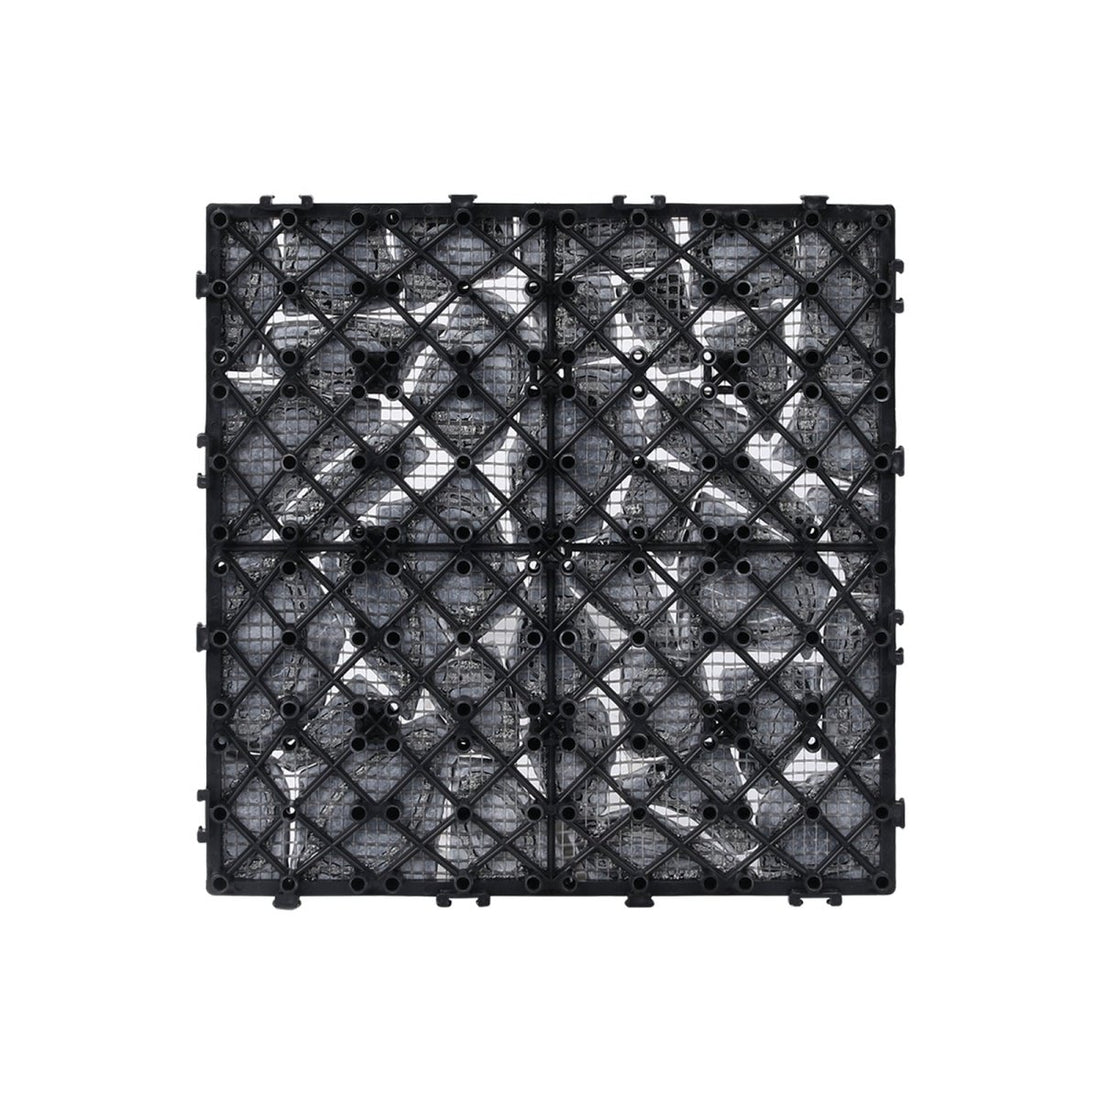 Lazy Tiles Stone Tile - Grey - Lazy Tiles